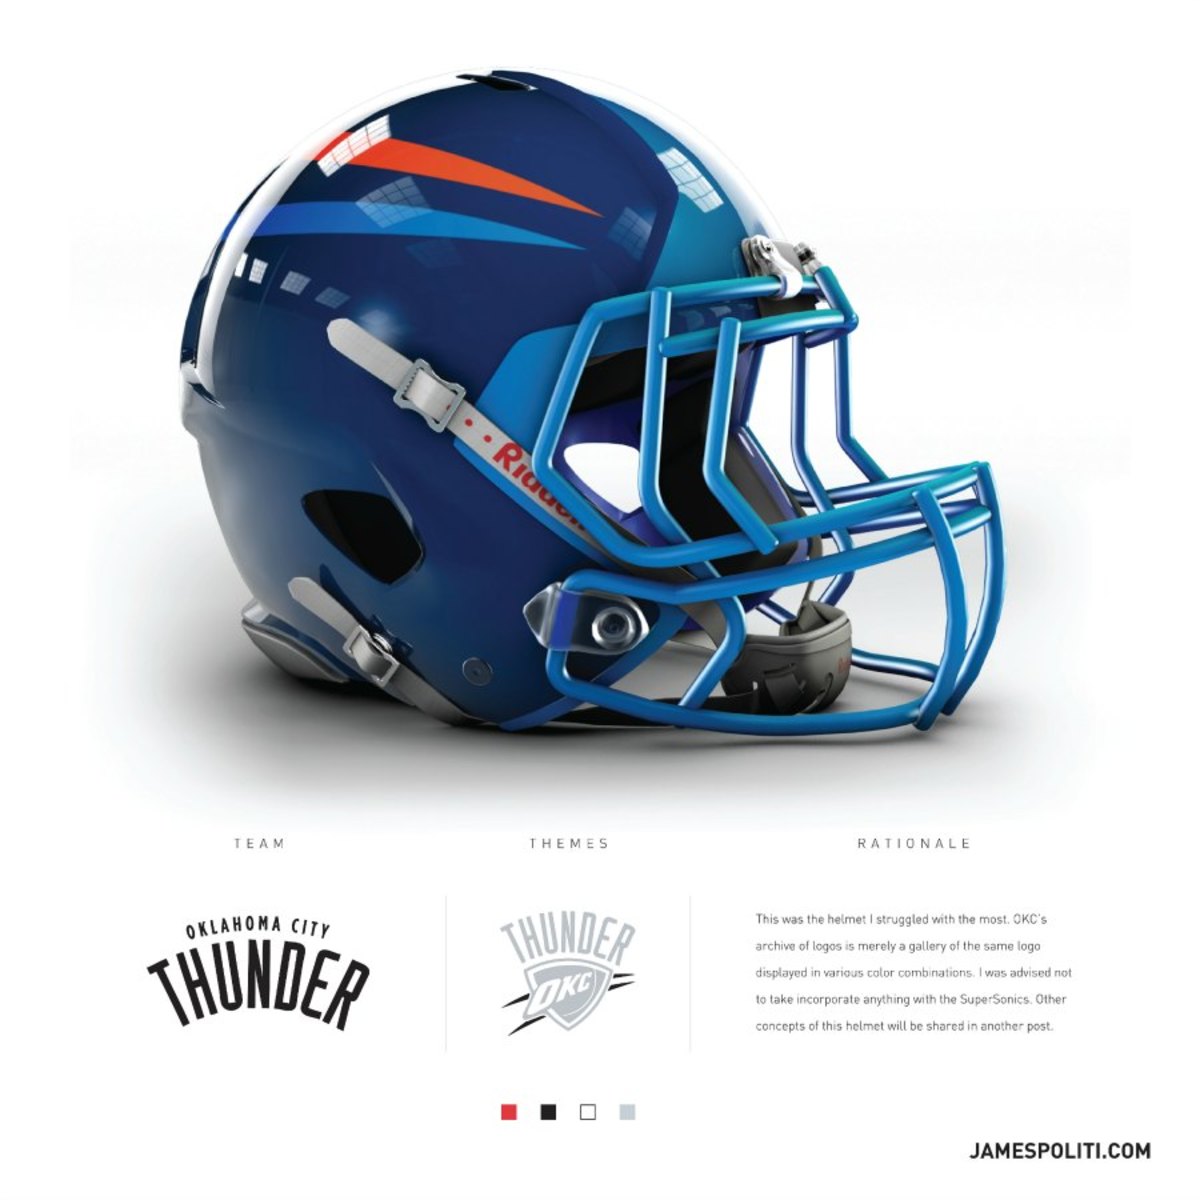 Oklahoma-City-Thunder-nba-helmet.jpg